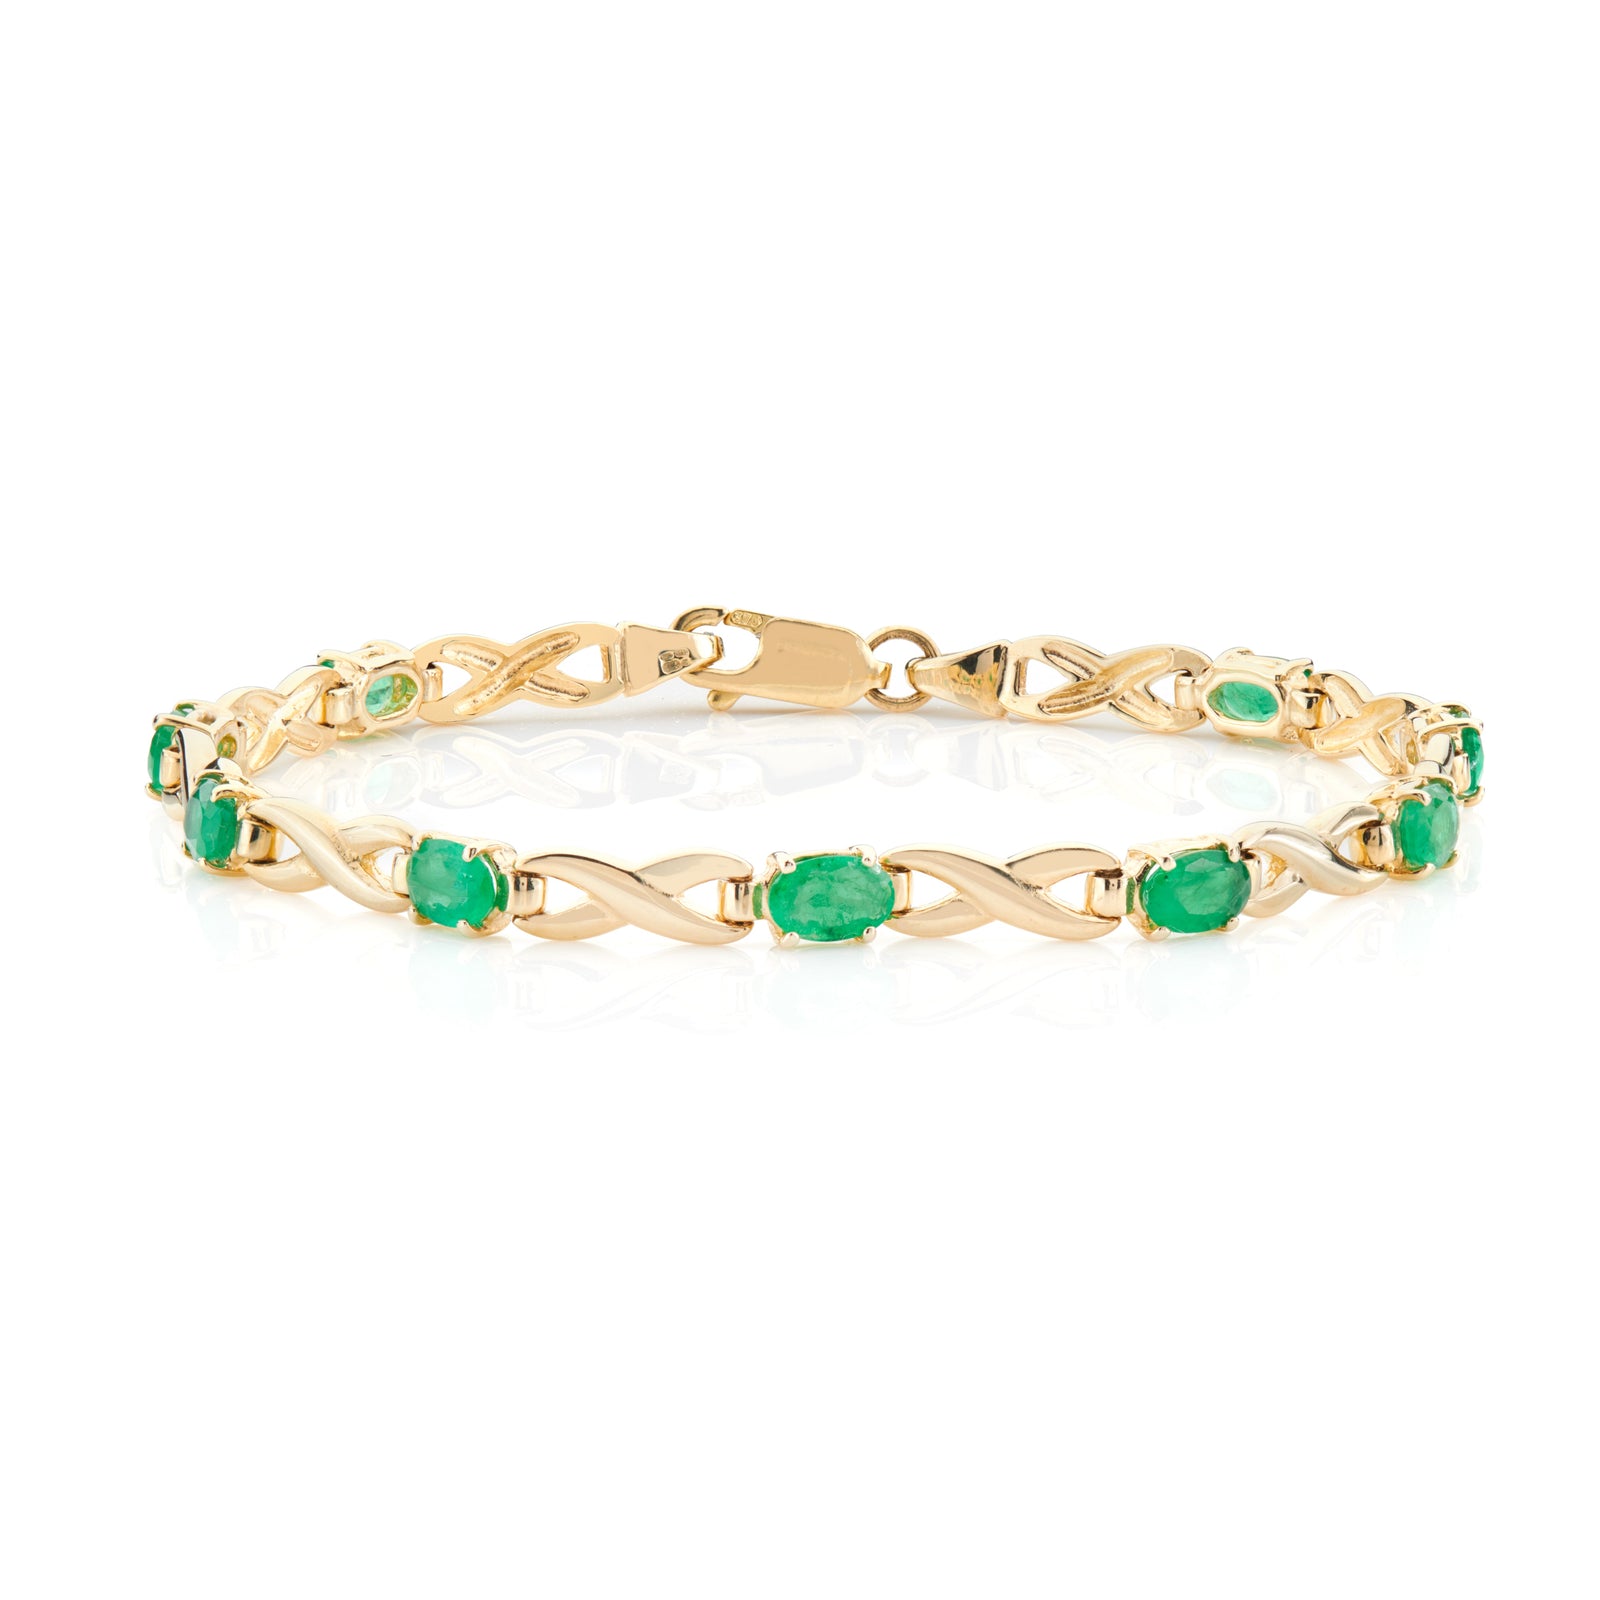 9ct gold 6x4mm oval emerald bracelet